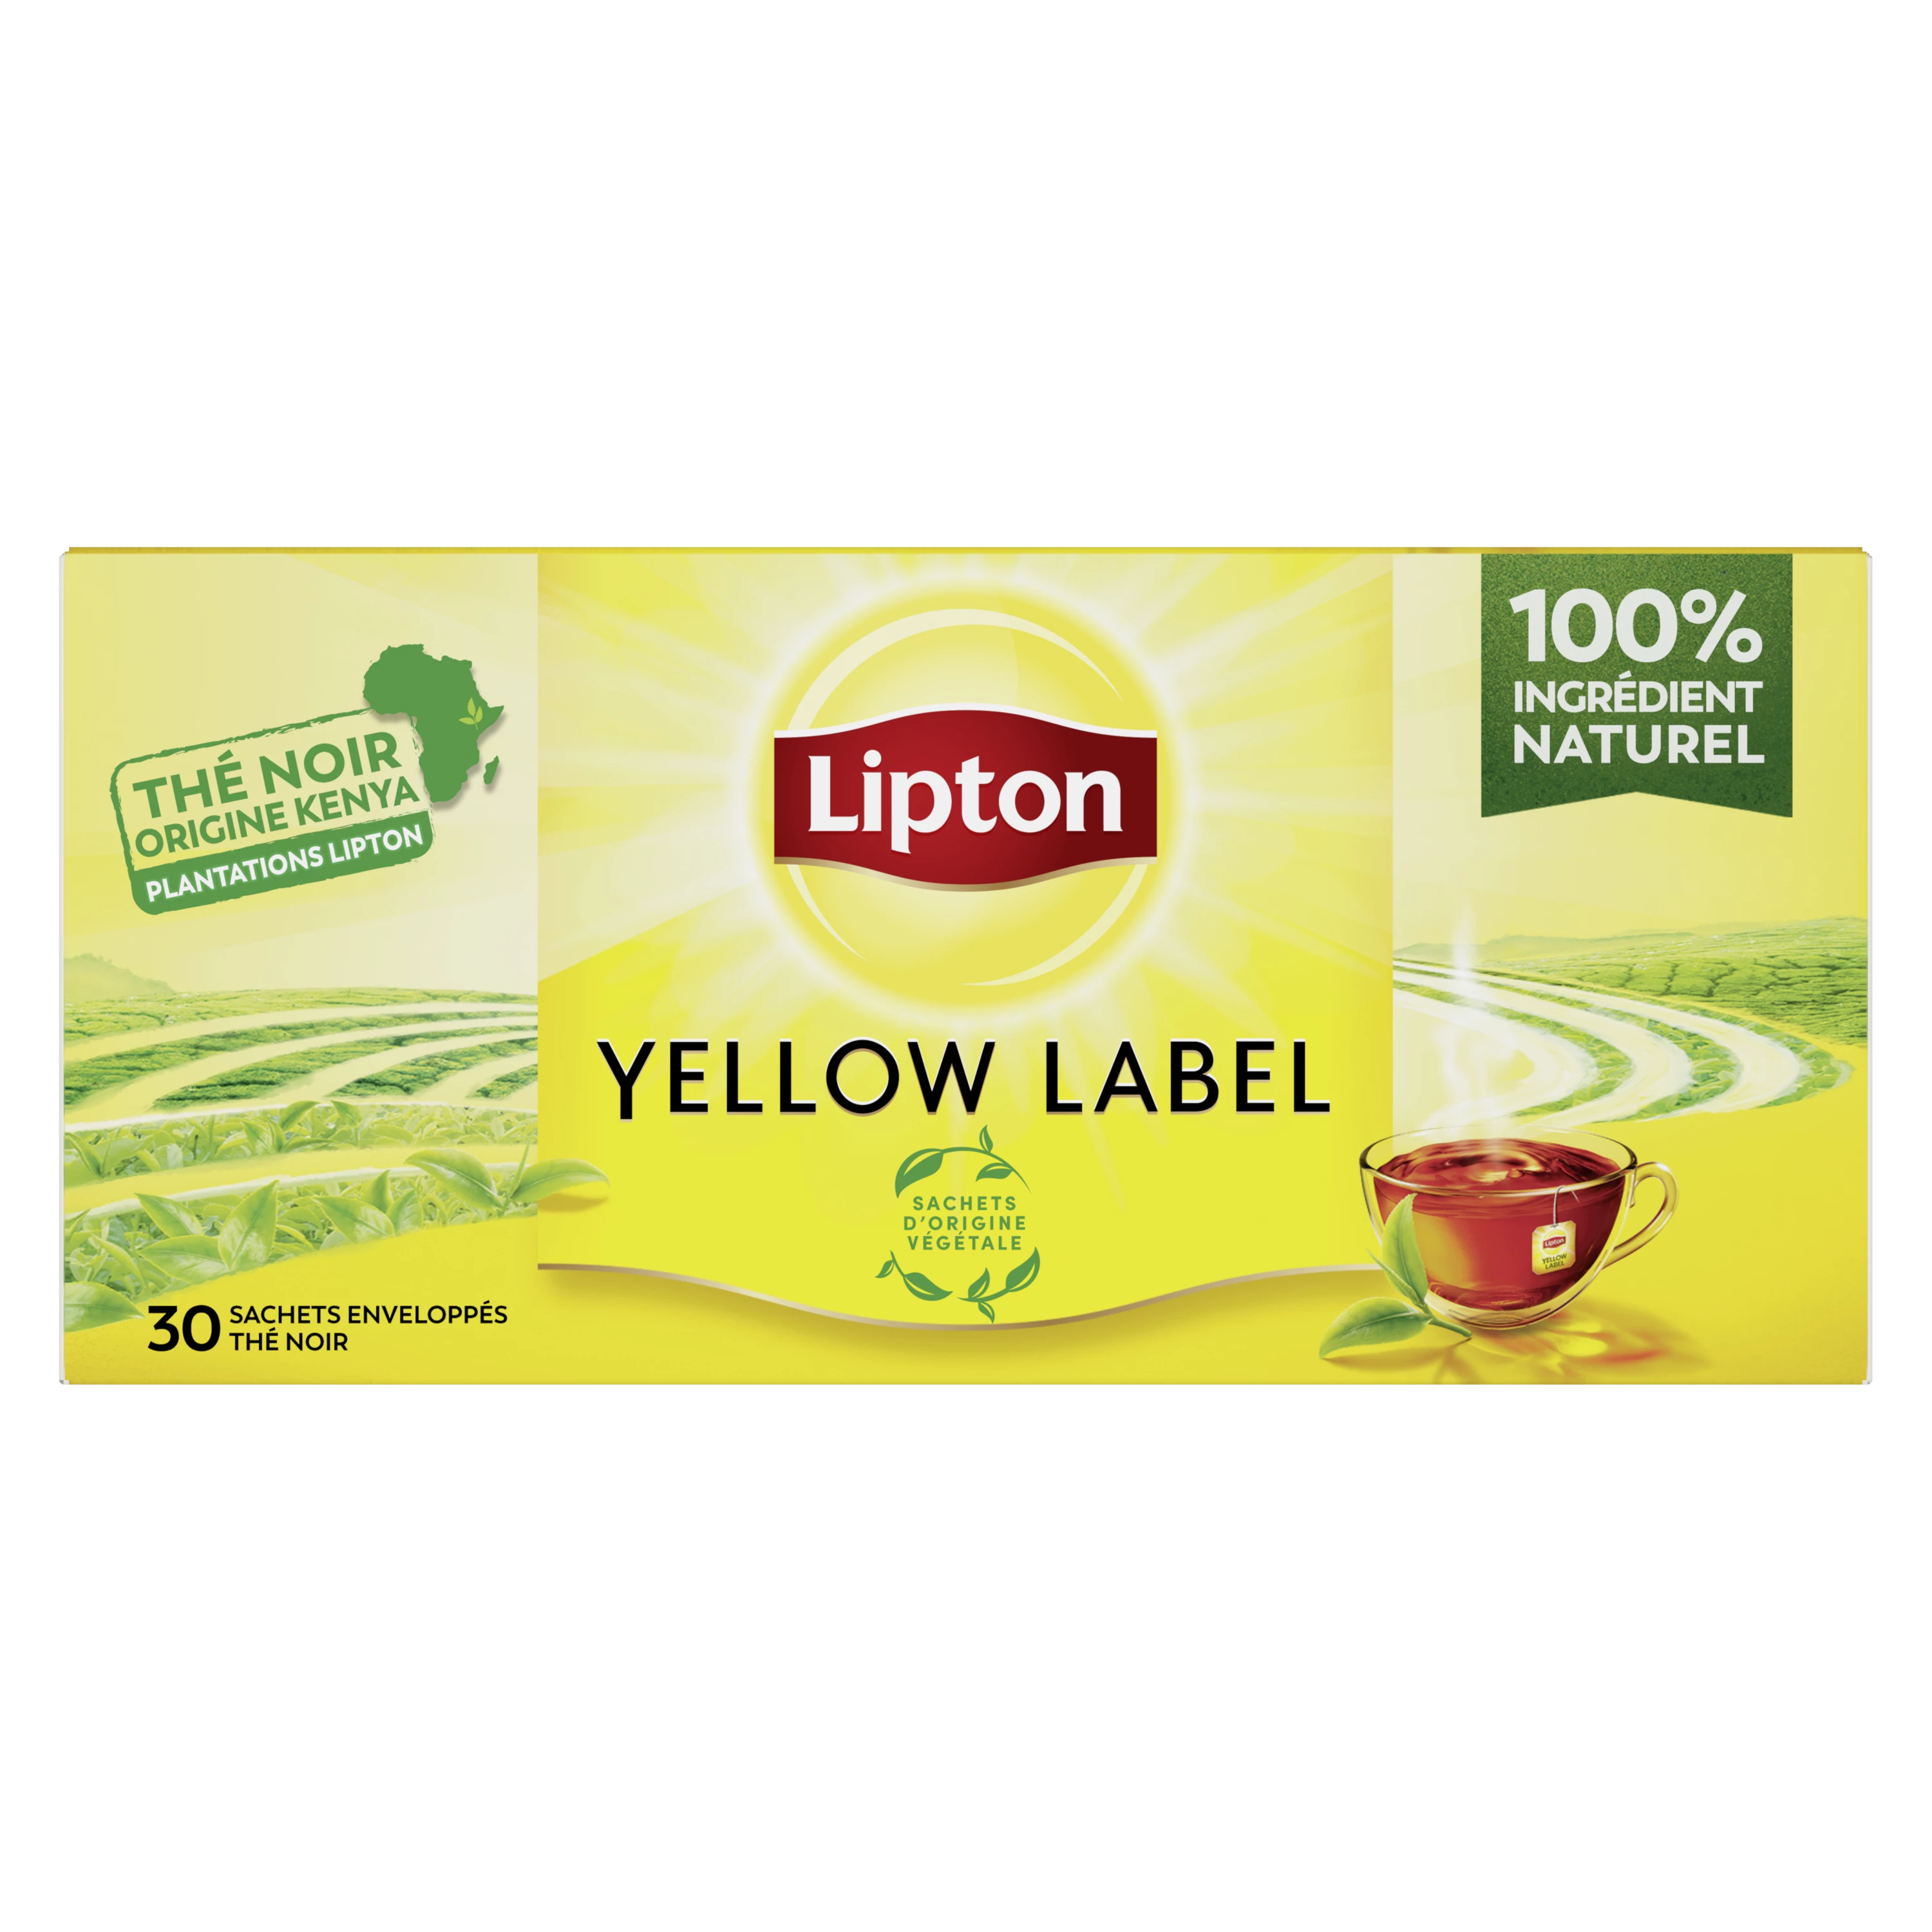 Thé Yellow Label 30s Kenia 60g - LIPTON